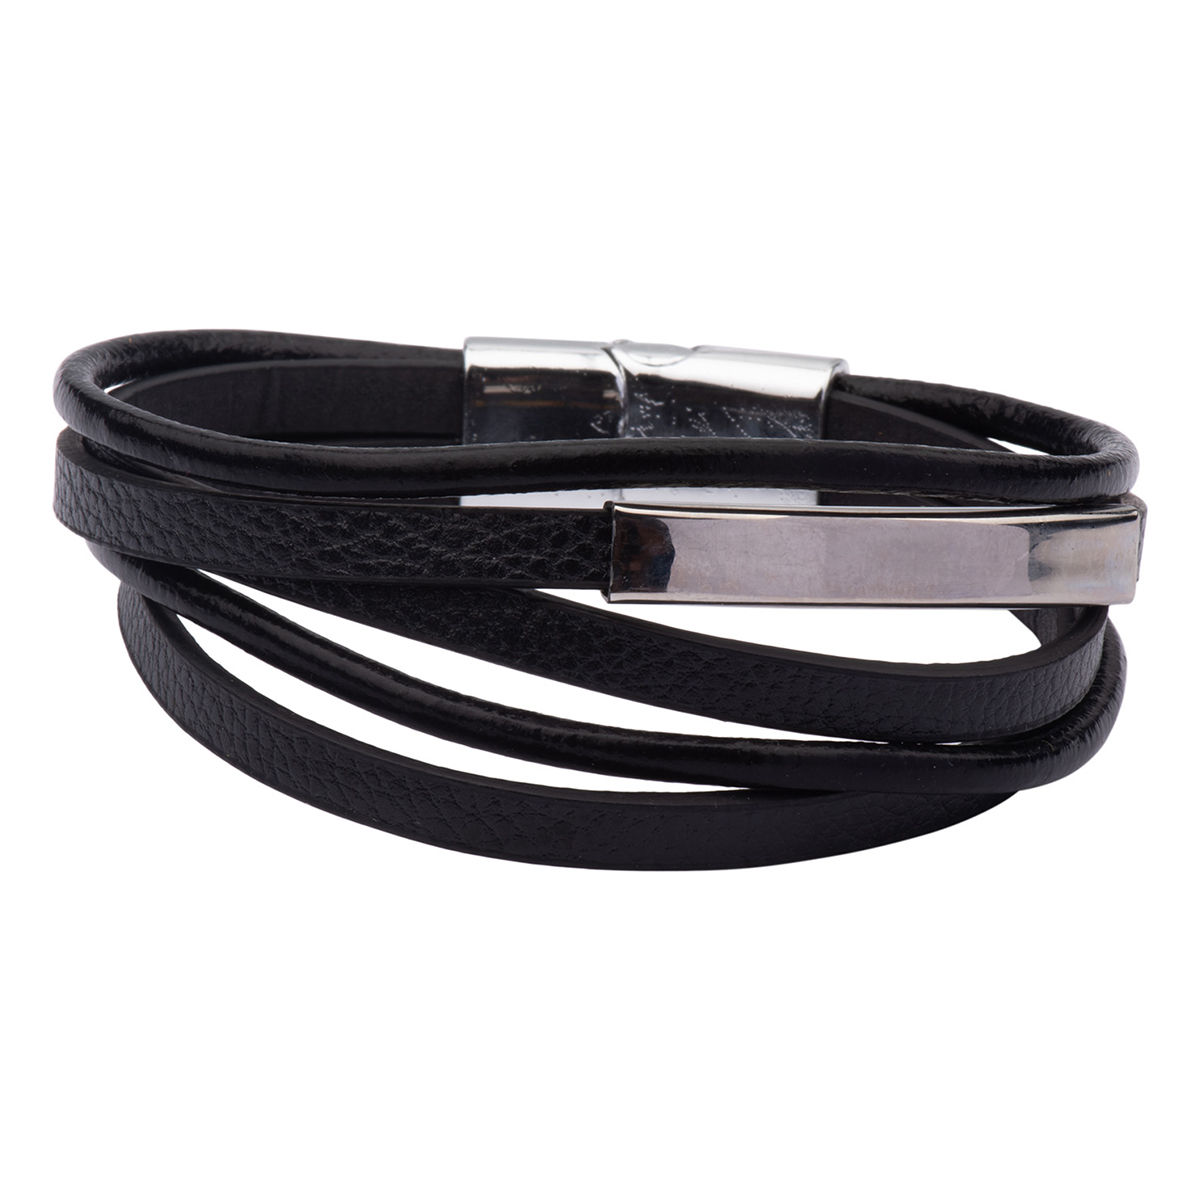 Buy Online Leather Black Stylish wrist band Leather Bracelet  jewellery  for men  menjewellcom